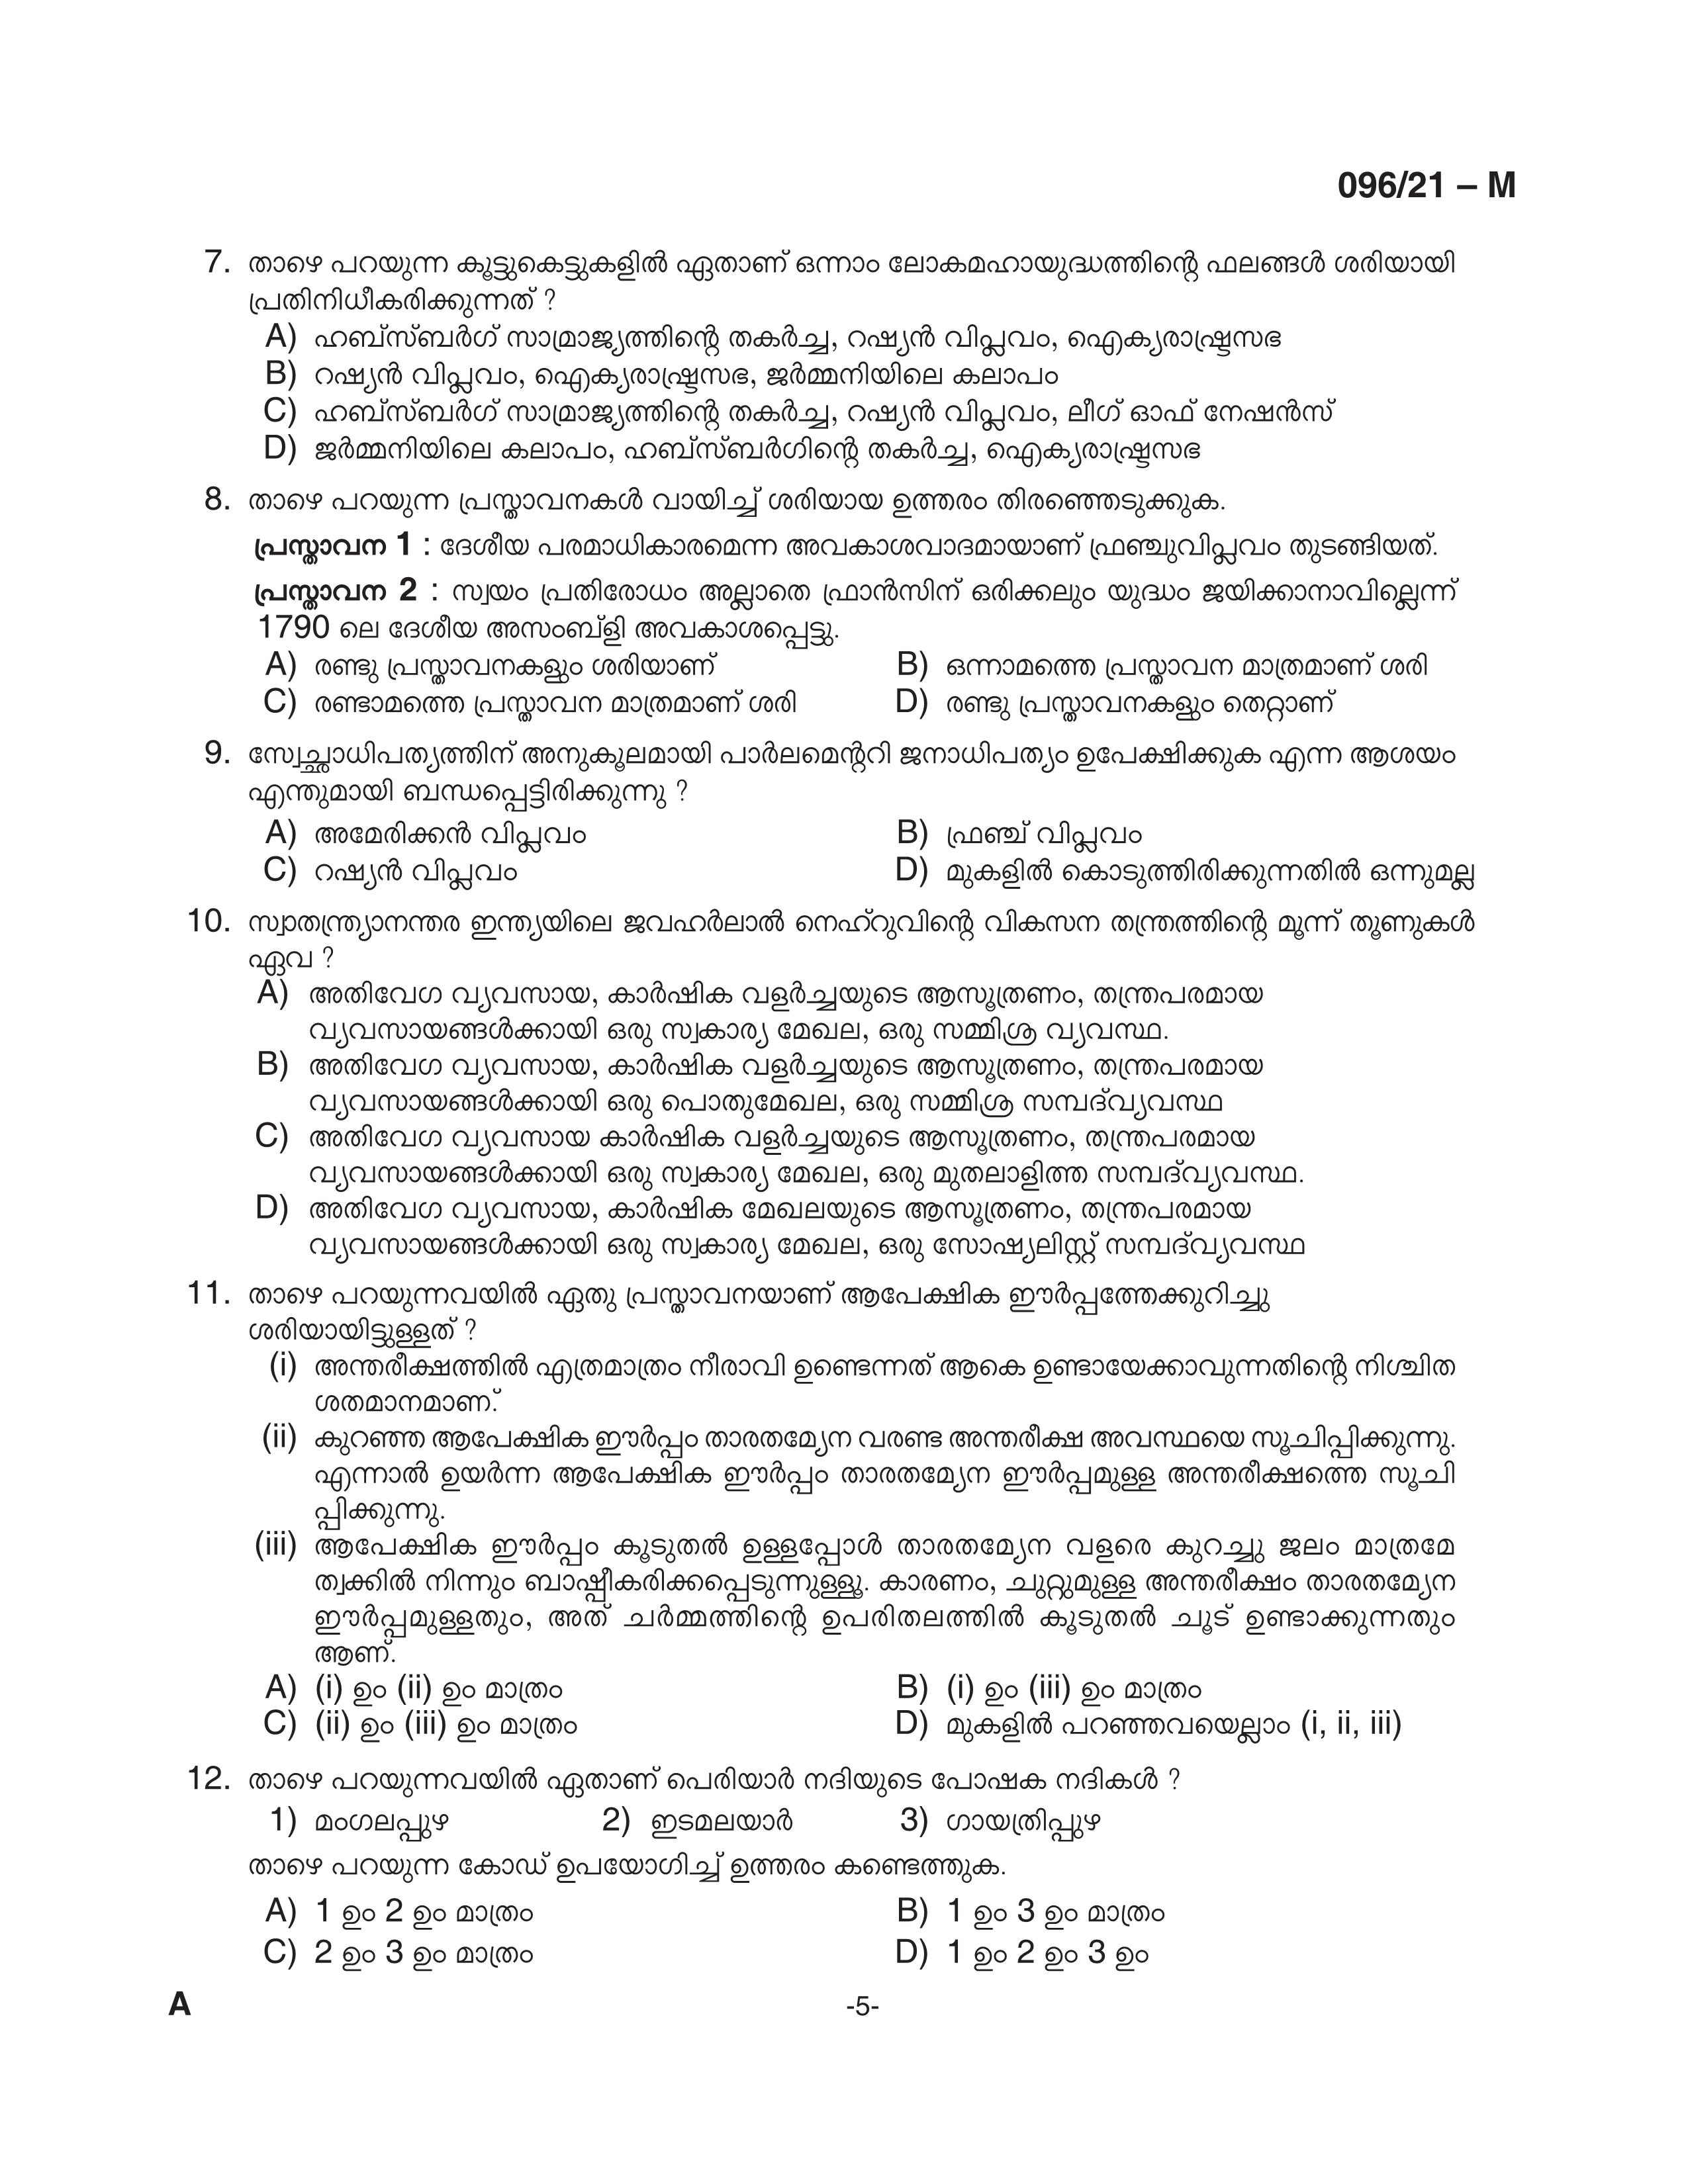 KPSC Degree Level Preliminary Exam Stage II Malayalam 2021 Code 09621 M 5